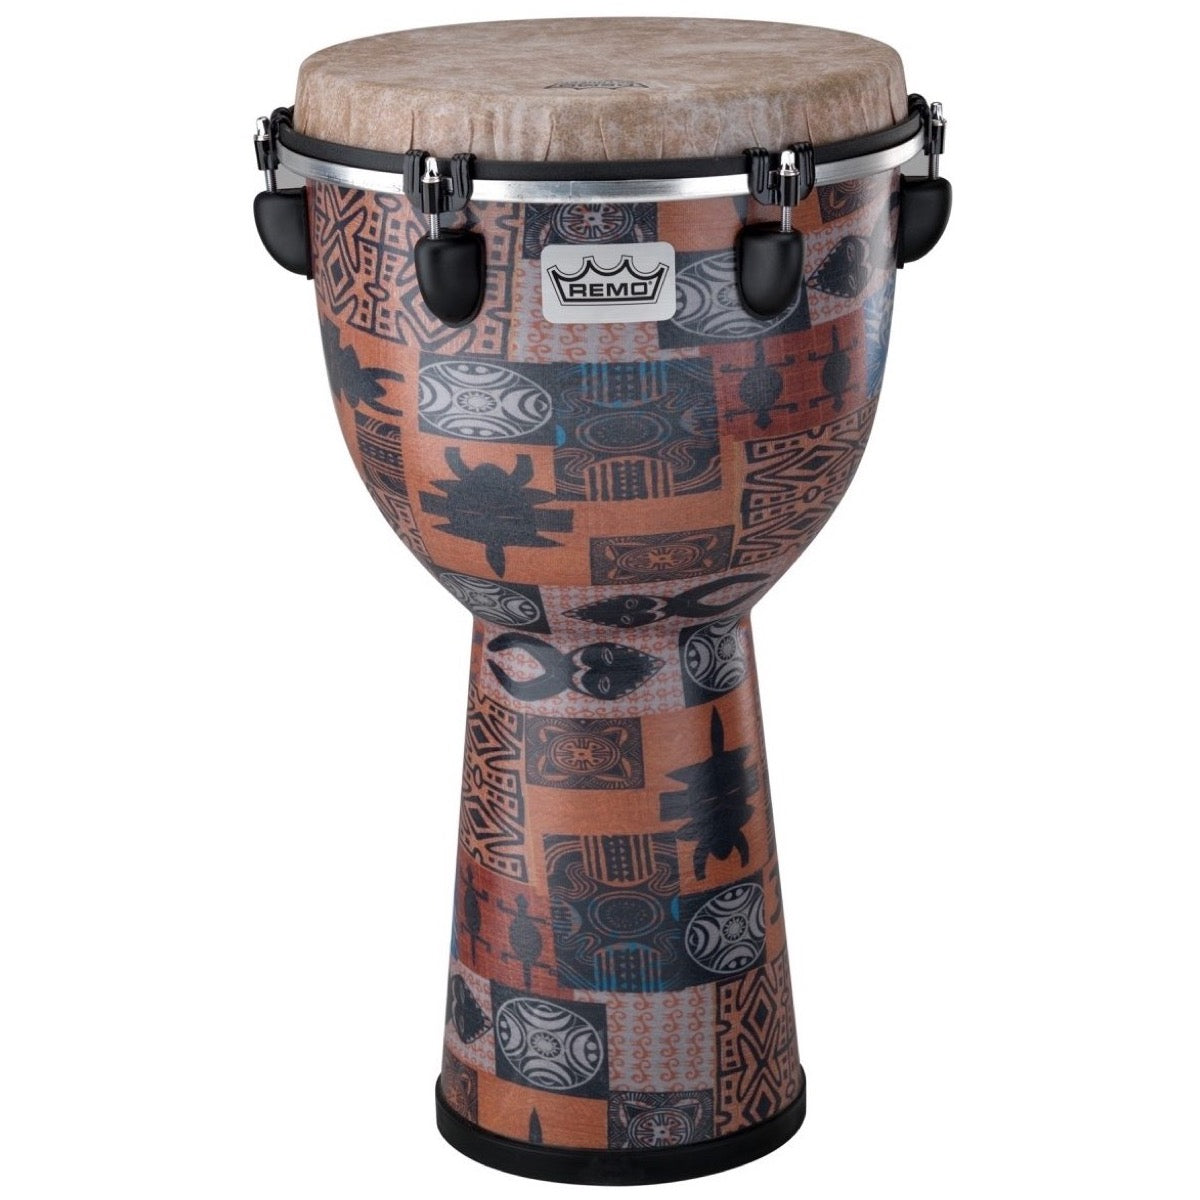 Remo Apex Djembe Drum, Orange, 12 Inch